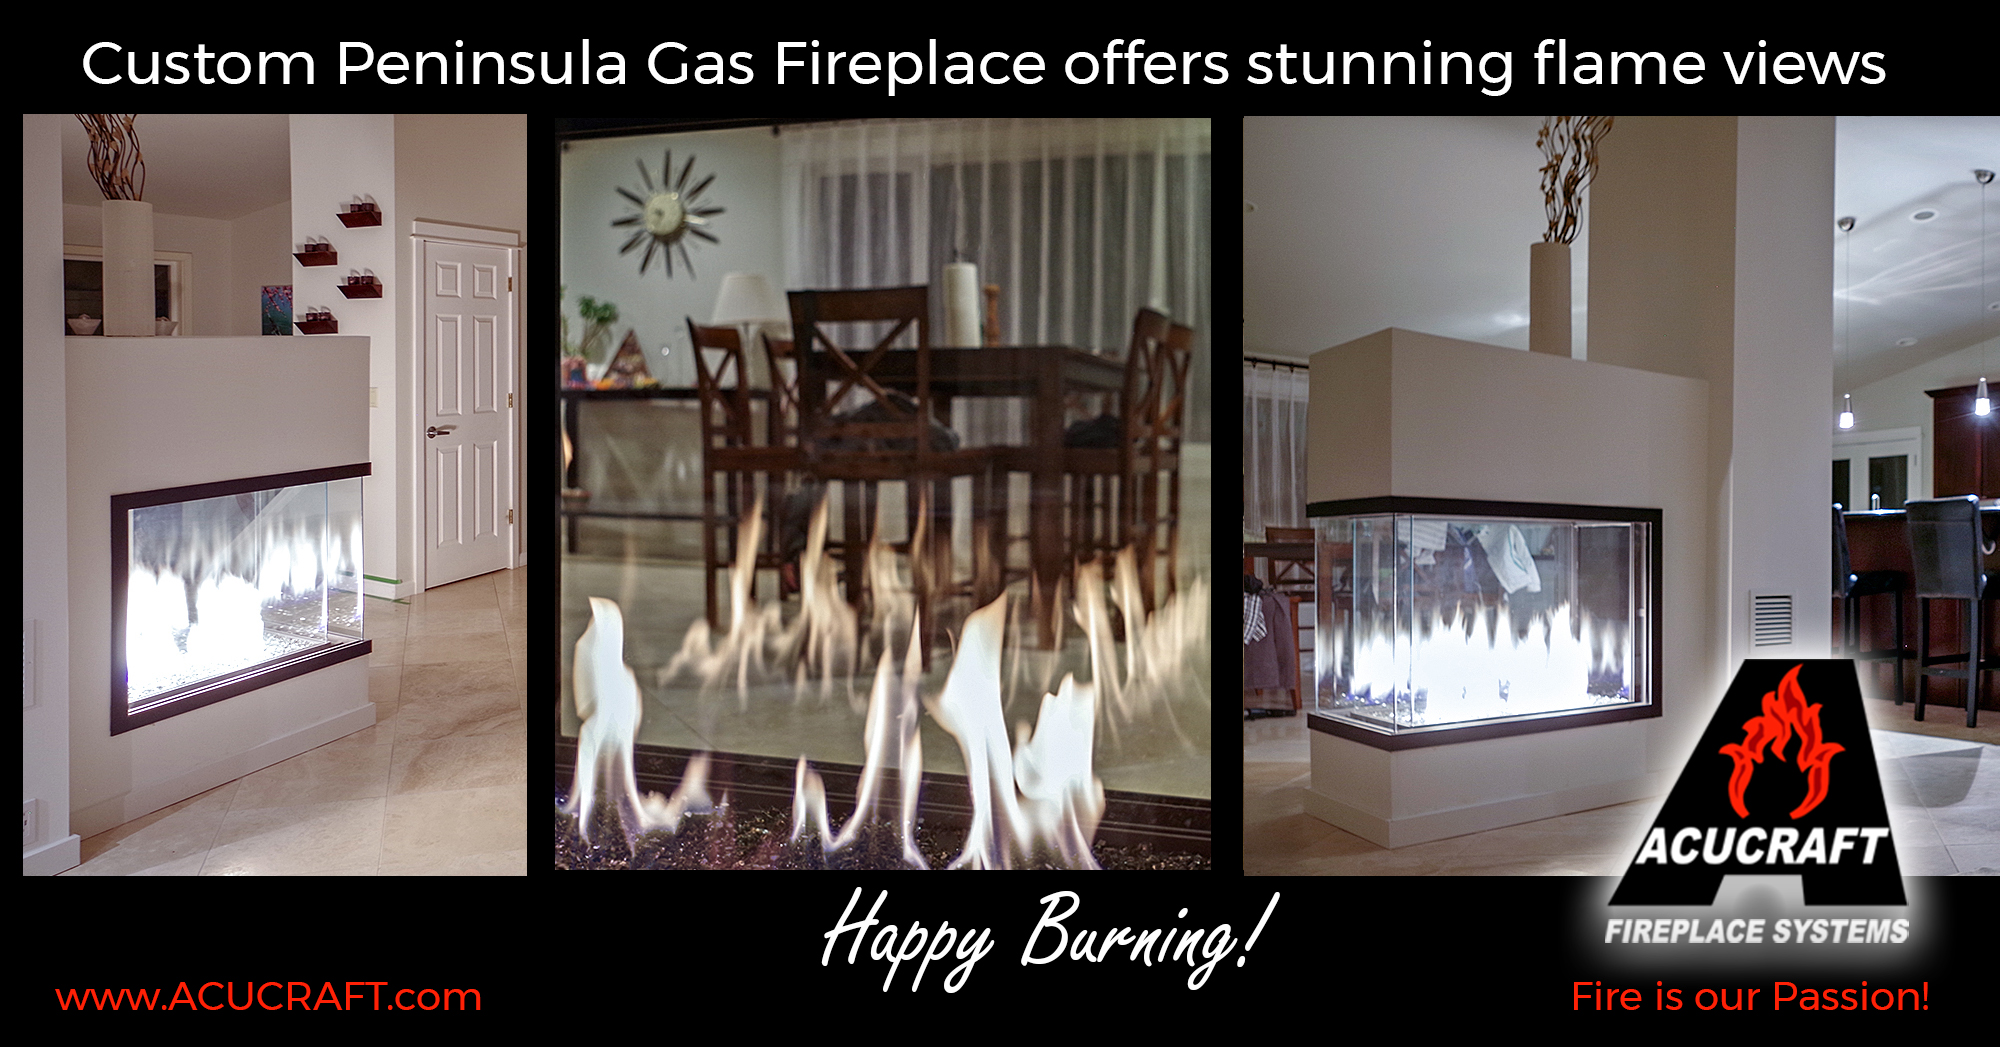 Fireplace Fresh Air Intake Vent Elegant Idea to Done Acucraft Custom Peninsula Gas Fireplace